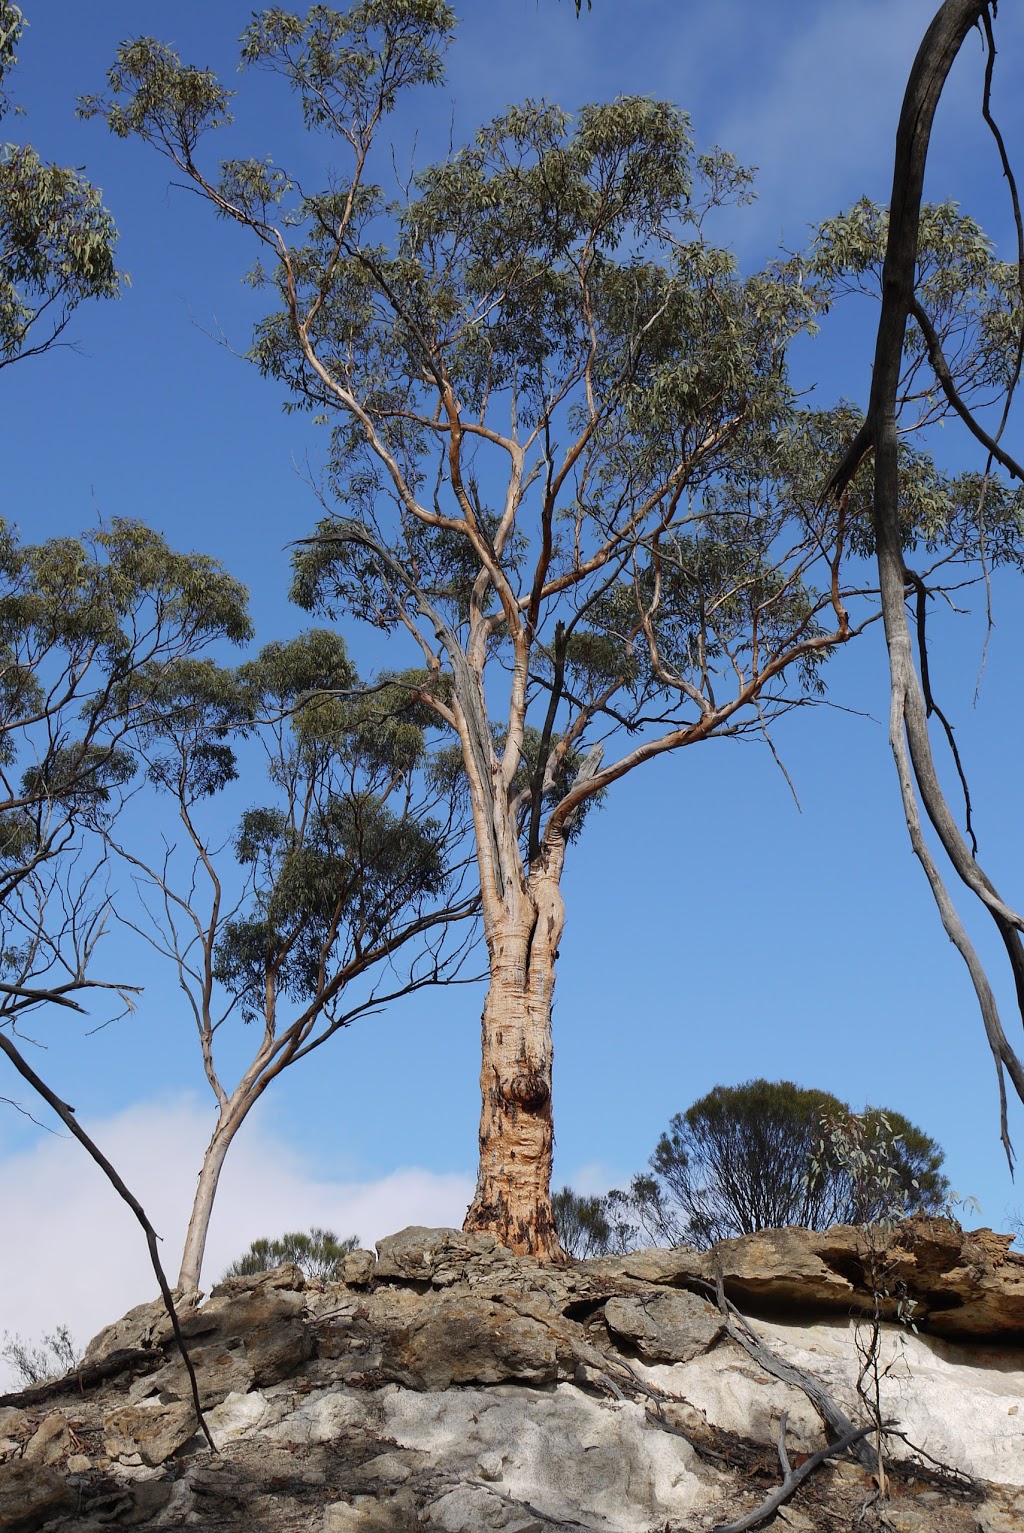 Chiddarcooping Nature Reserve Sign | Morrison Rd, Warralakin WA 6421, Australia